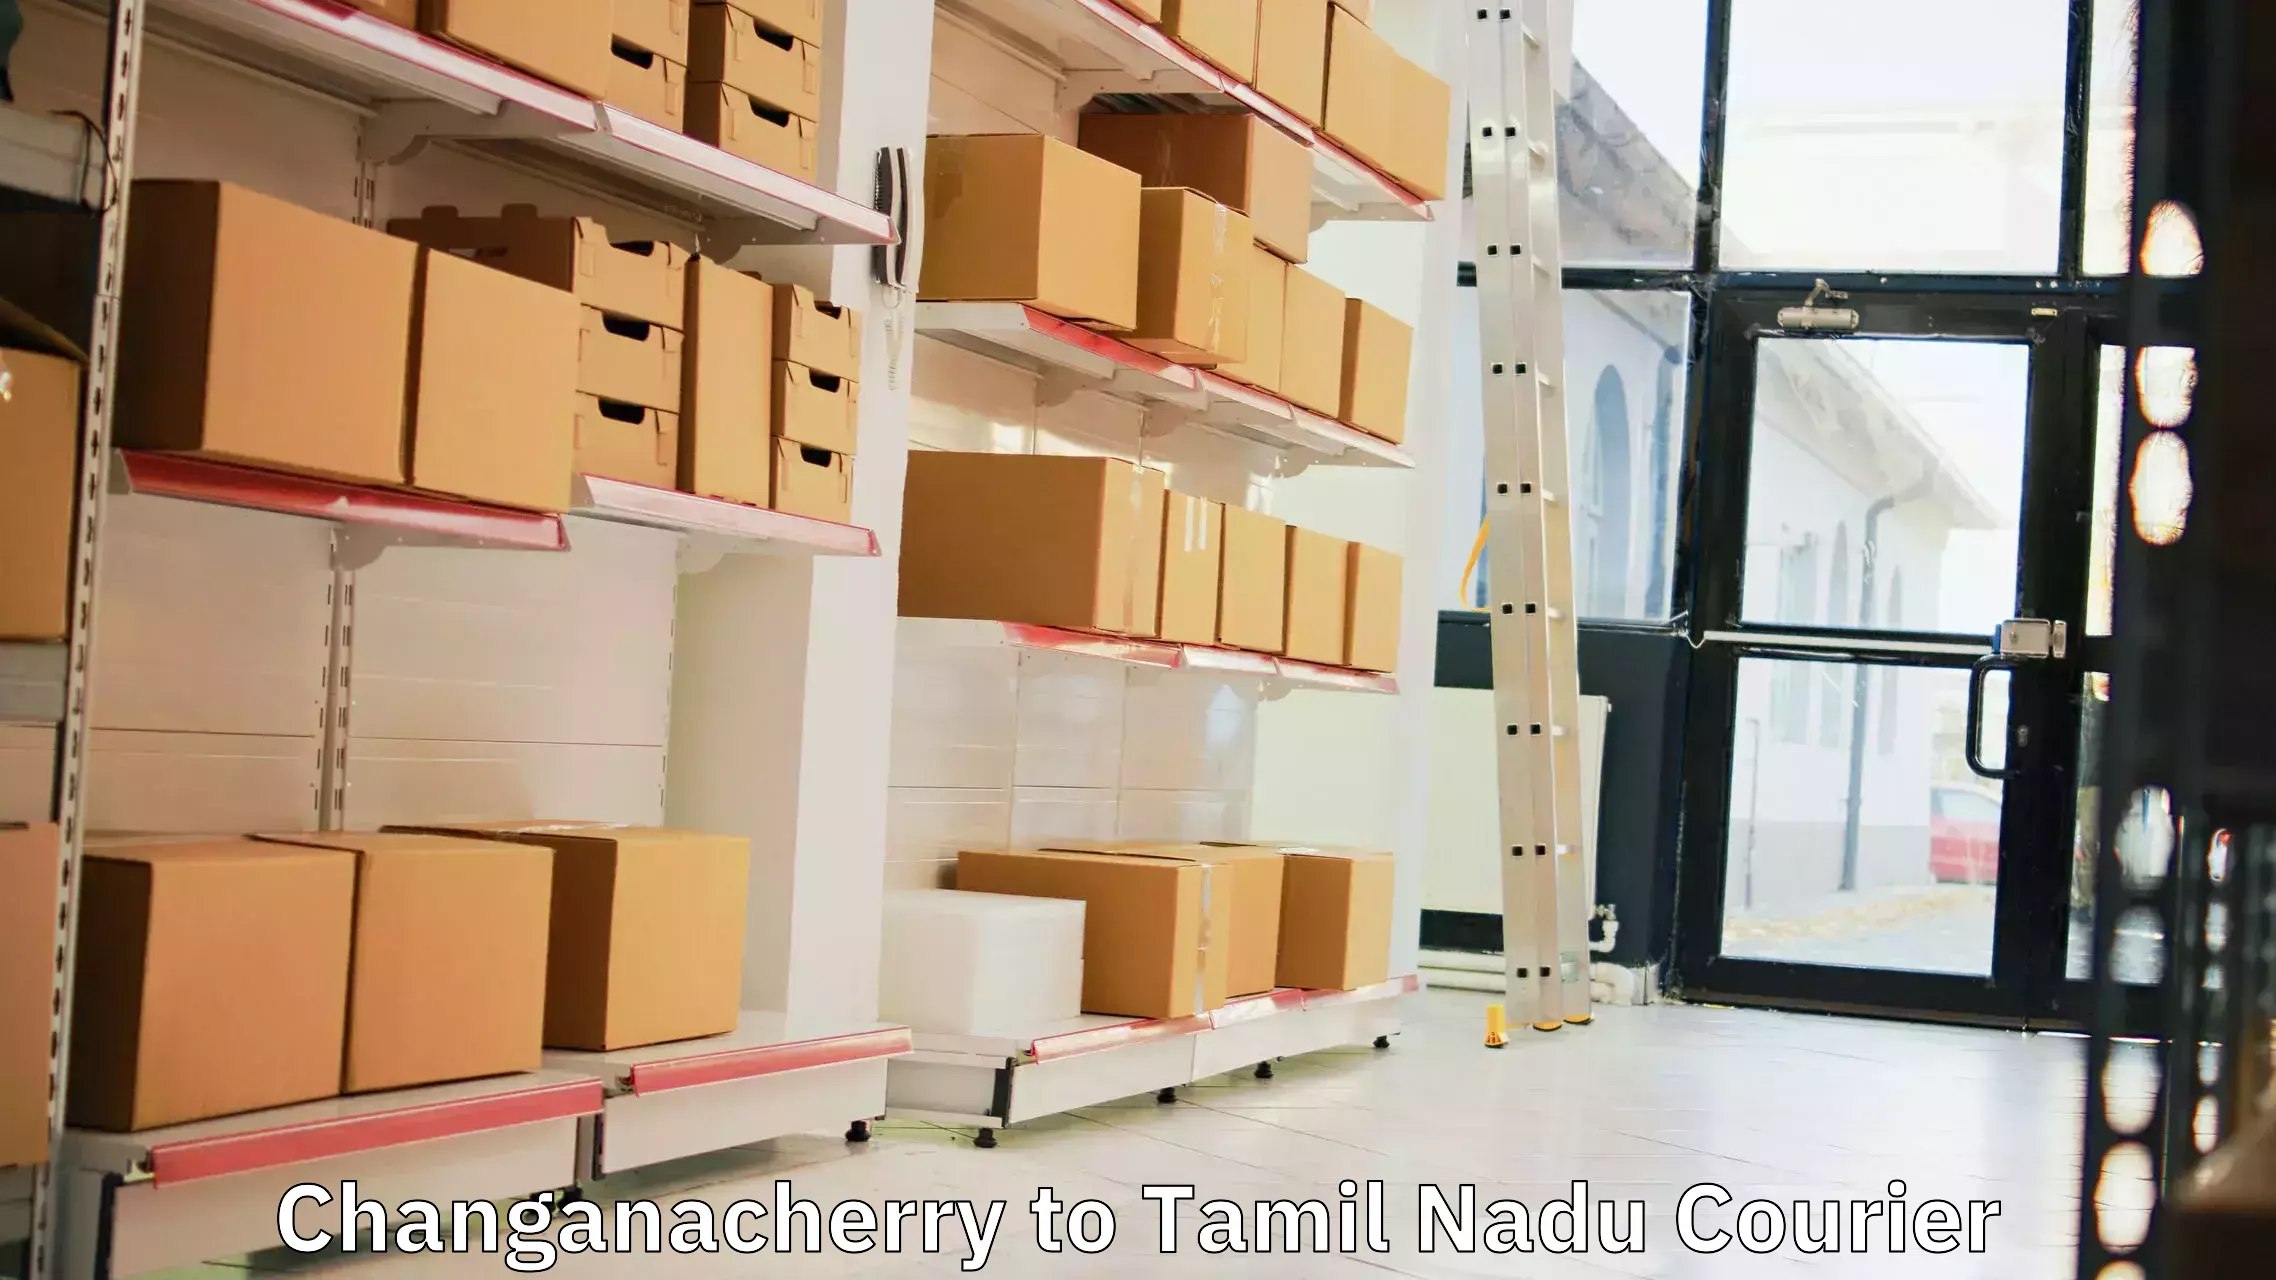 Global courier networks Changanacherry to IIIT Tiruchirappalli